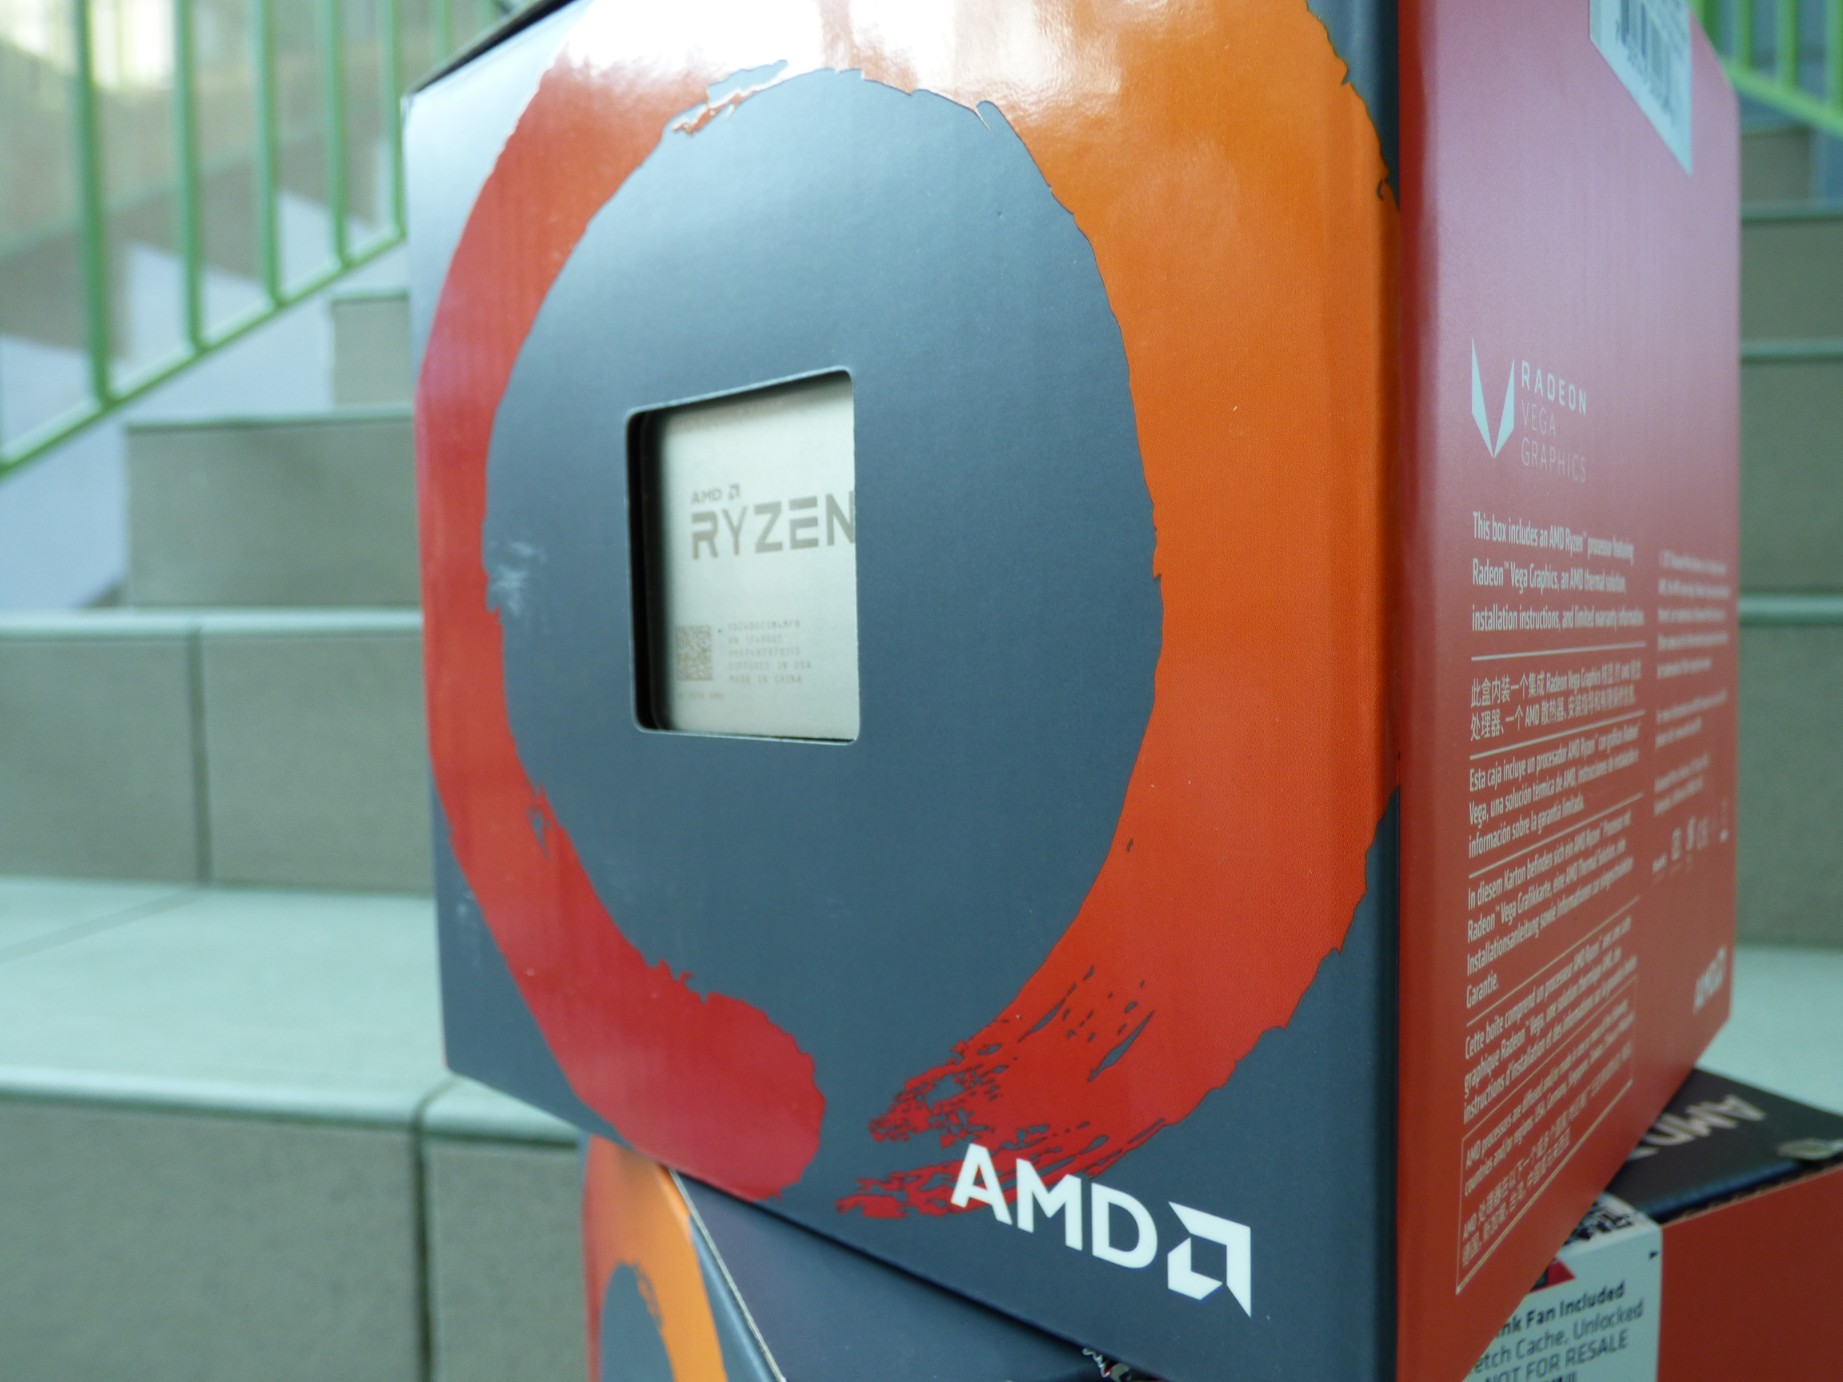 Testujemy AMD Ryzen z grafiką Radeon Vega